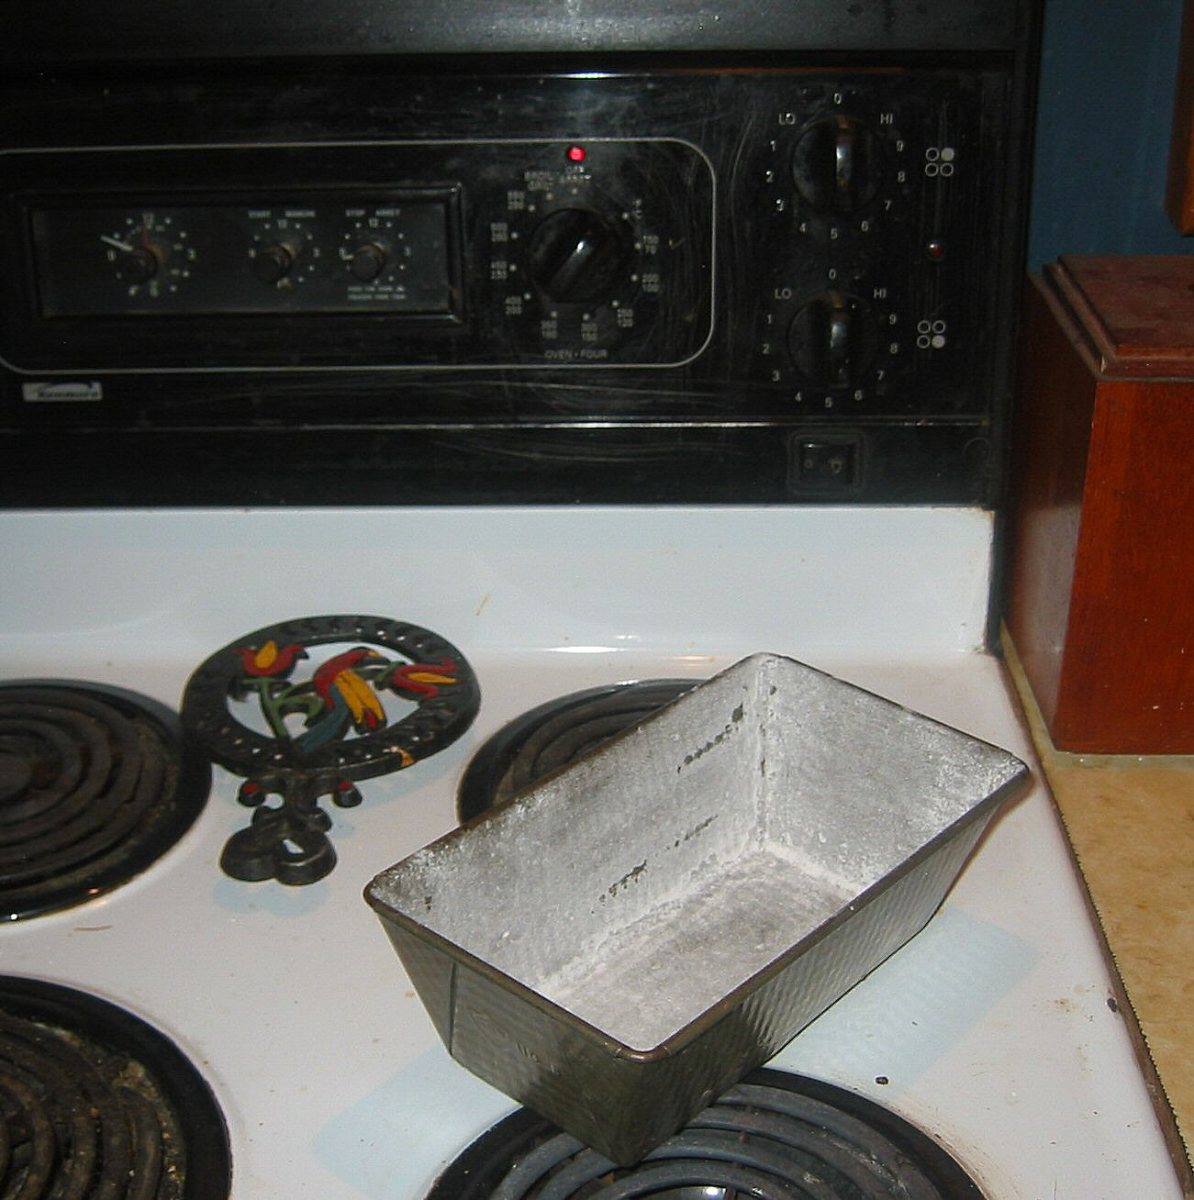 Preheat oven and prepare pan.